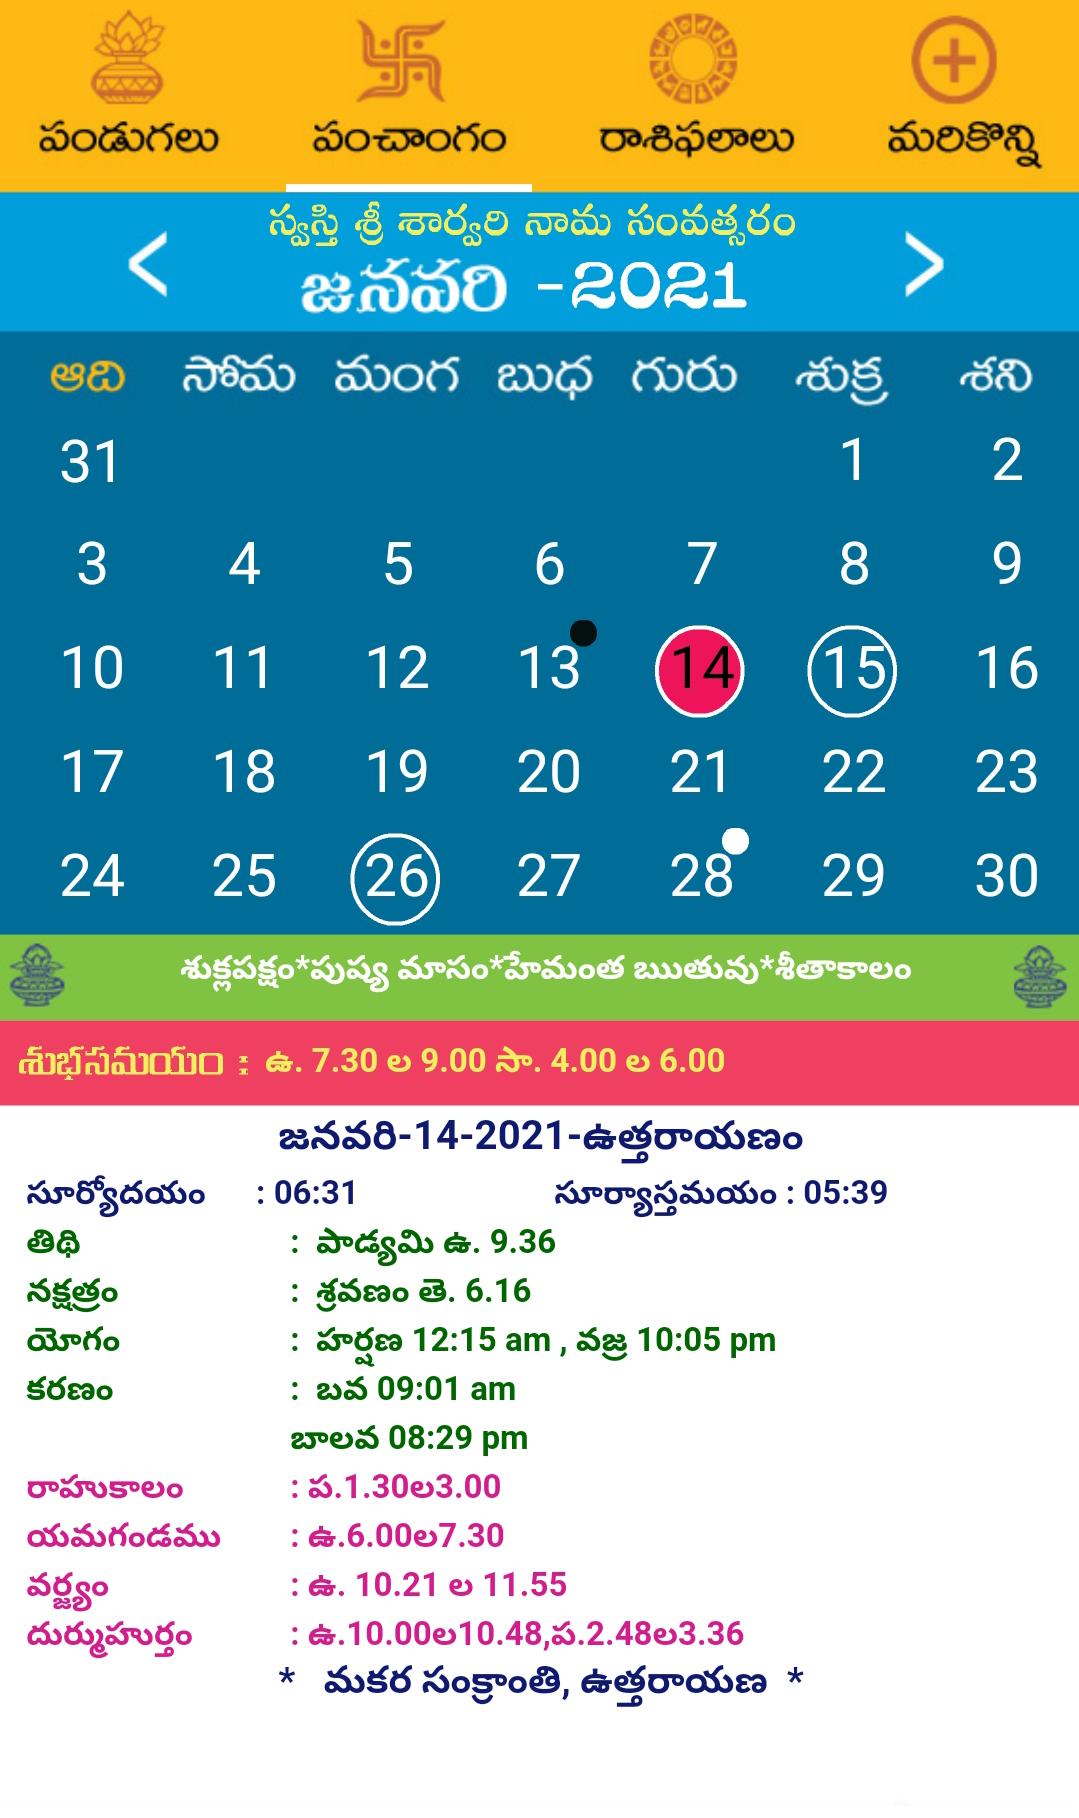 Featured image of post Vikram Telugu Calendar 2021 App / Telugu calendar panchang 2021 allows you to view maasam kalam rutuvu vaaram thitdhi and nakshatram yogam karanam sooryodhayam sooryaasthamam information for all days in telugu.